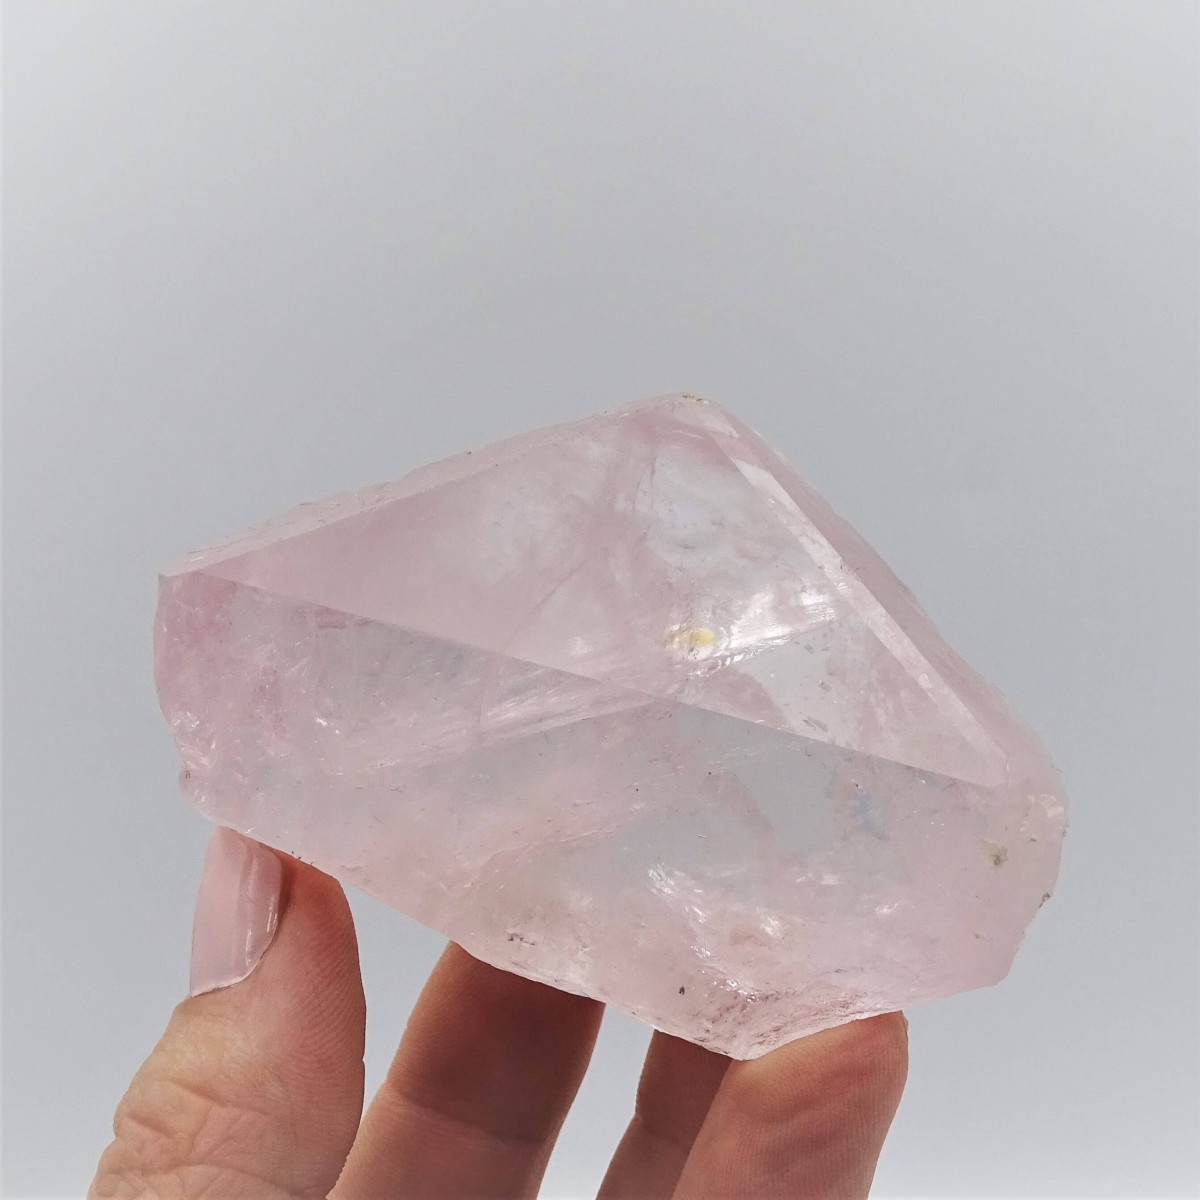 Morganite natural crystal in top quality 121.9g, Afghanistan